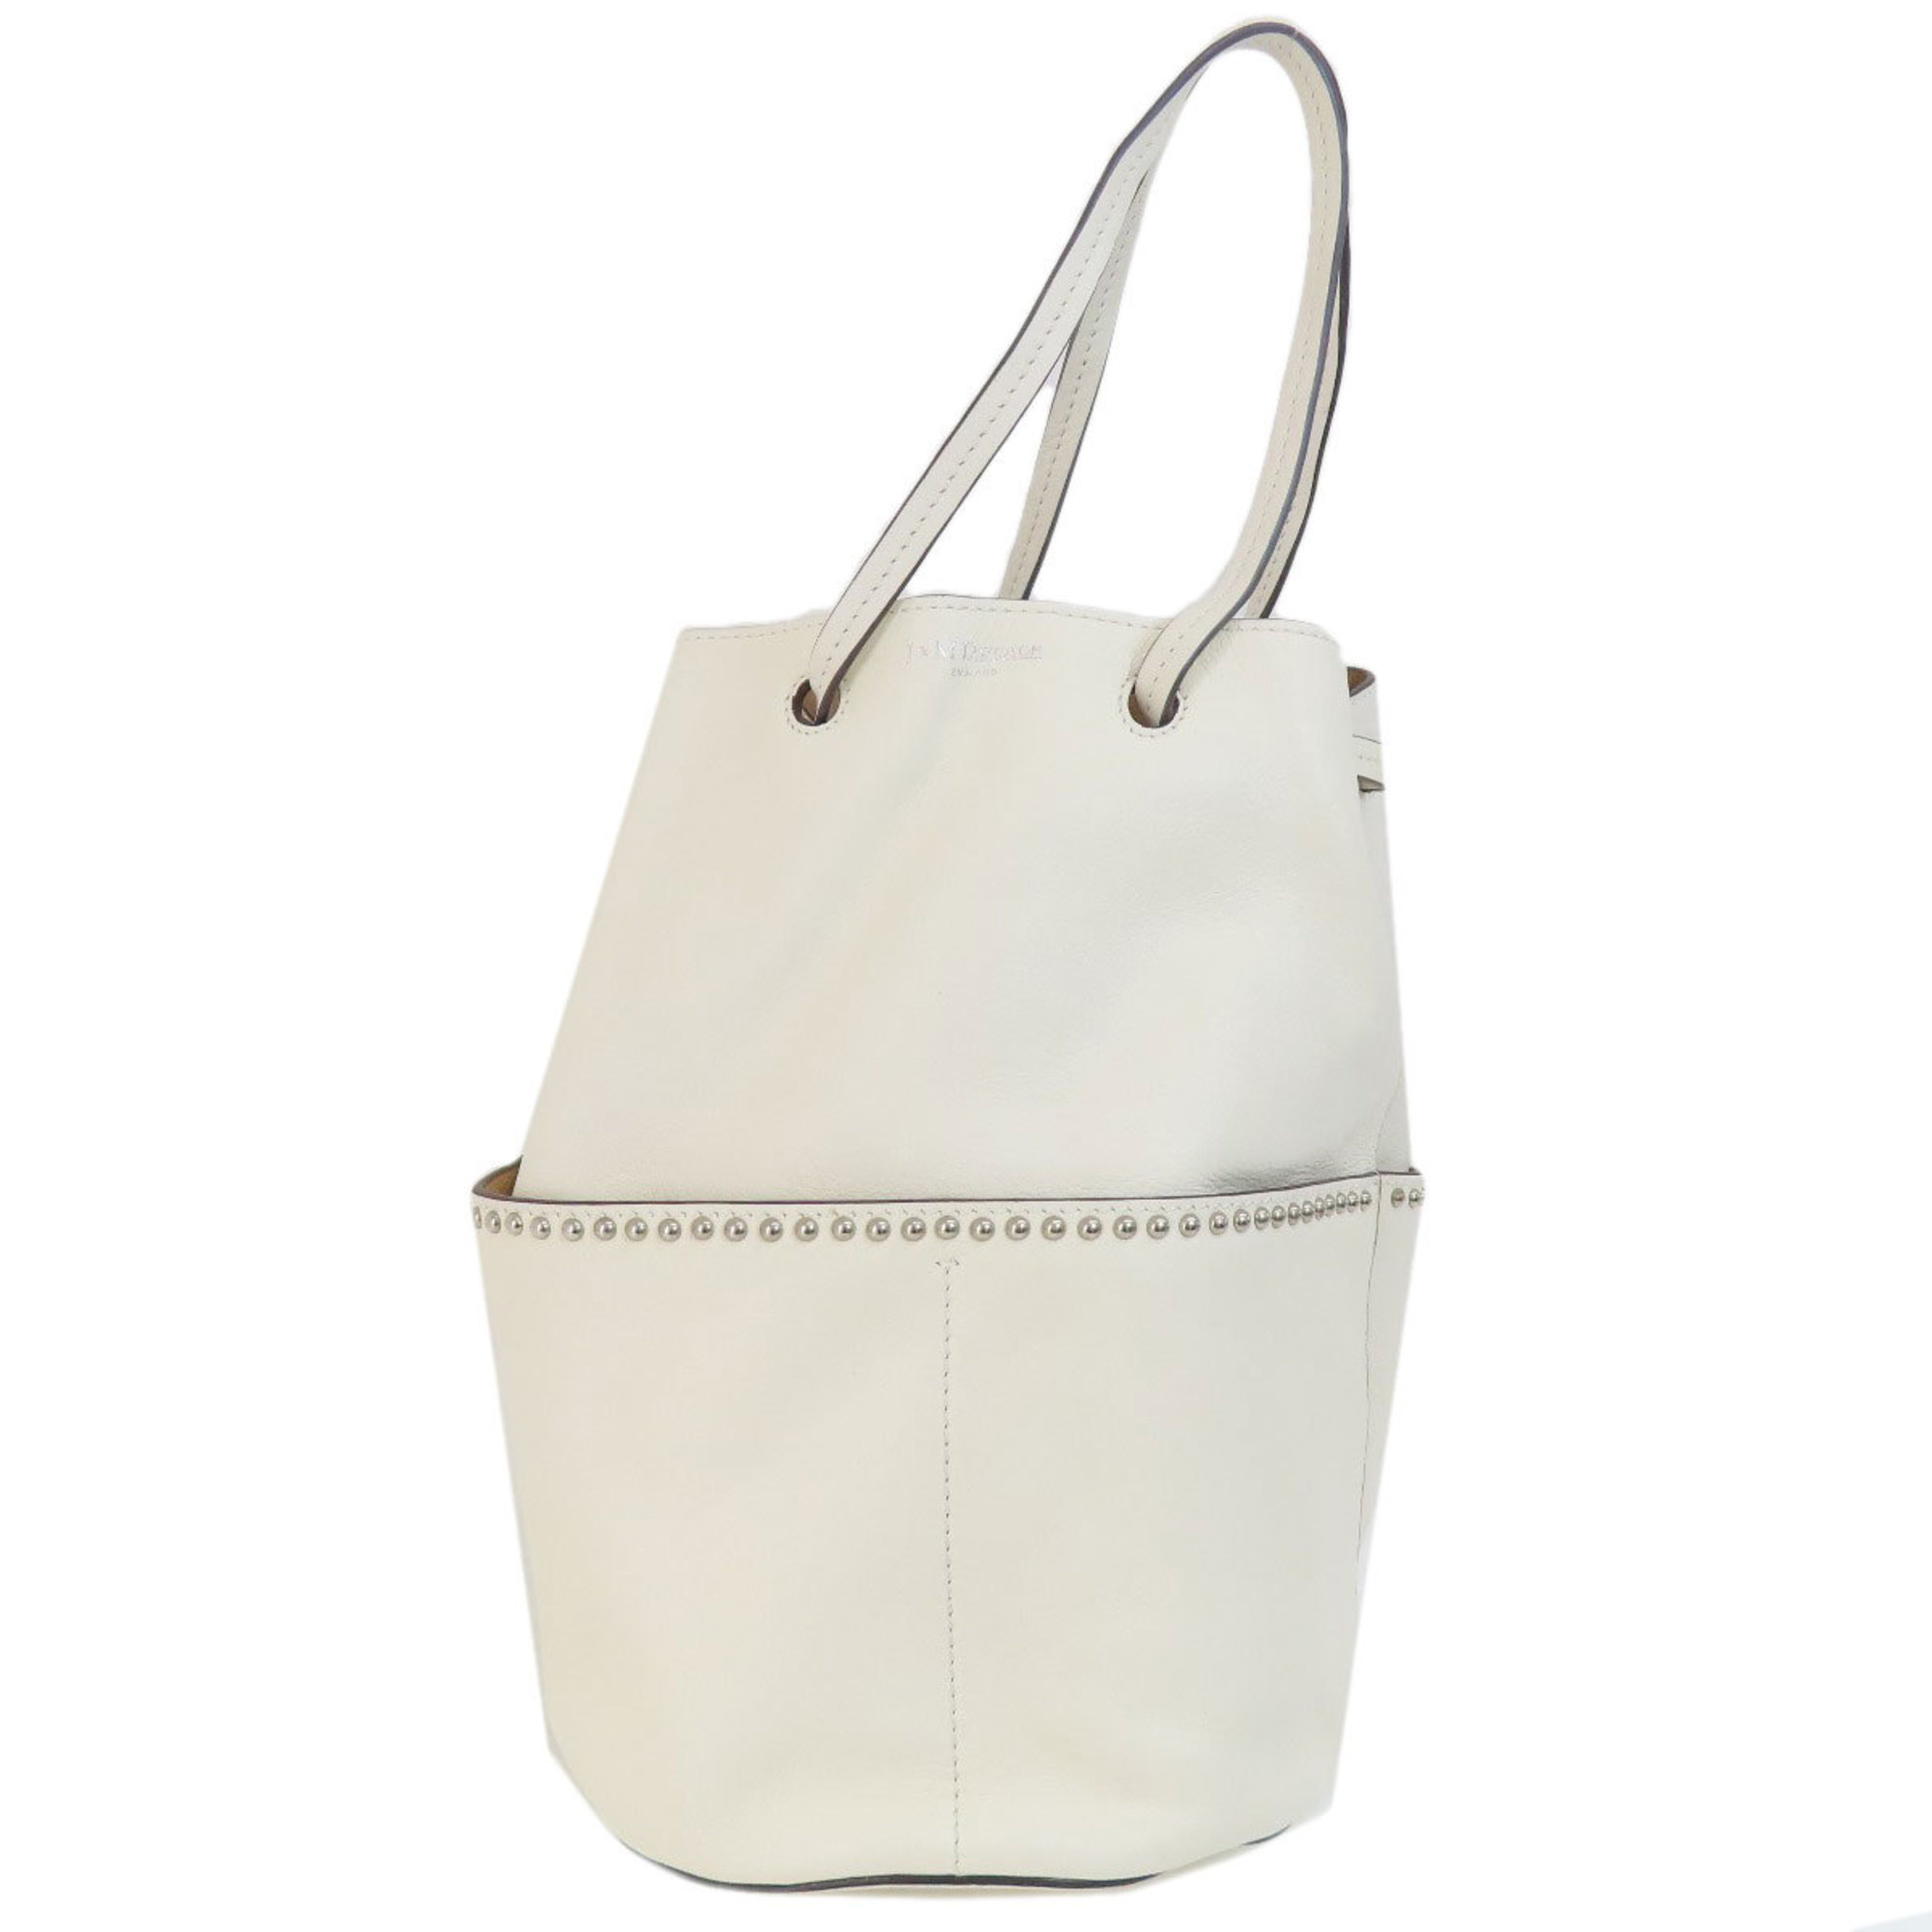 J&M Davidson Leather Handbags for Women